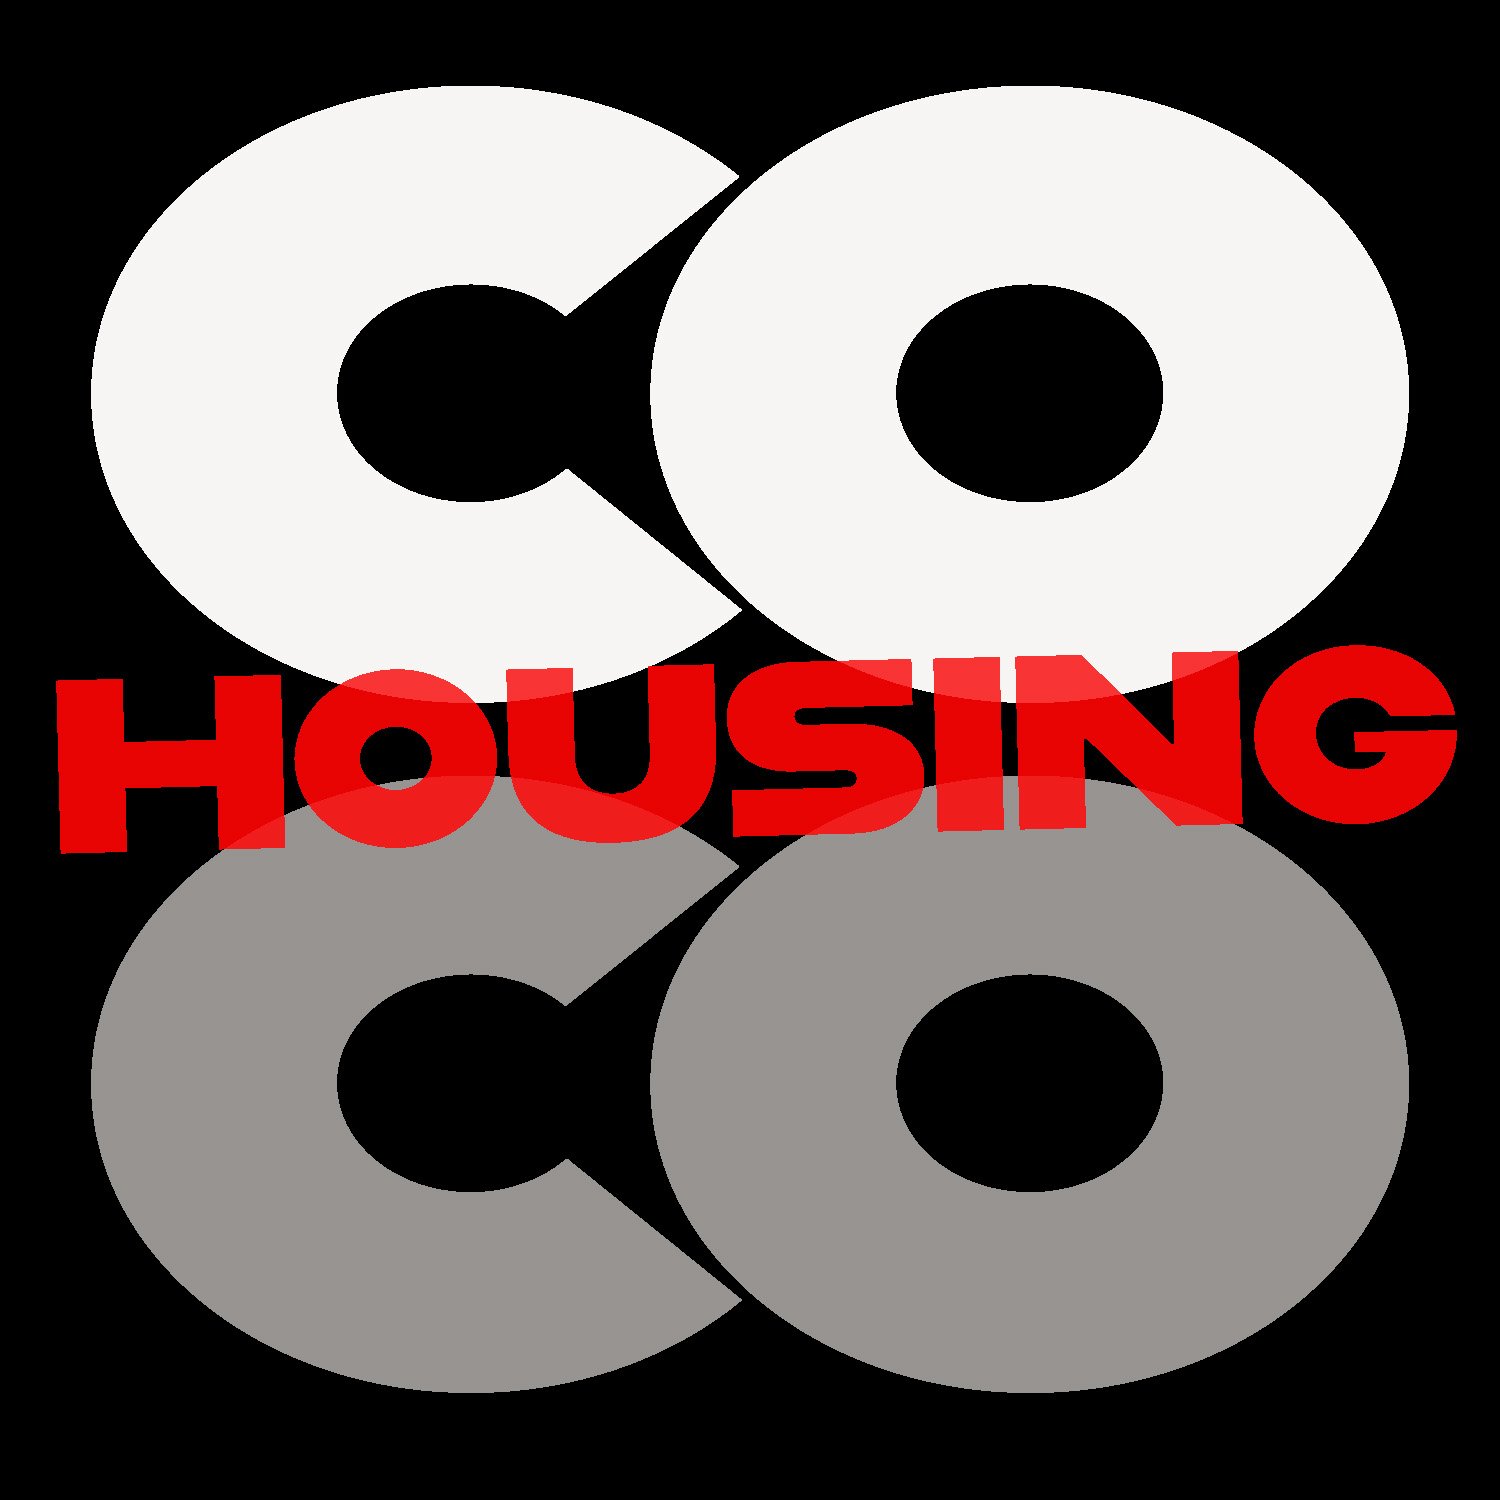 COCO Housing